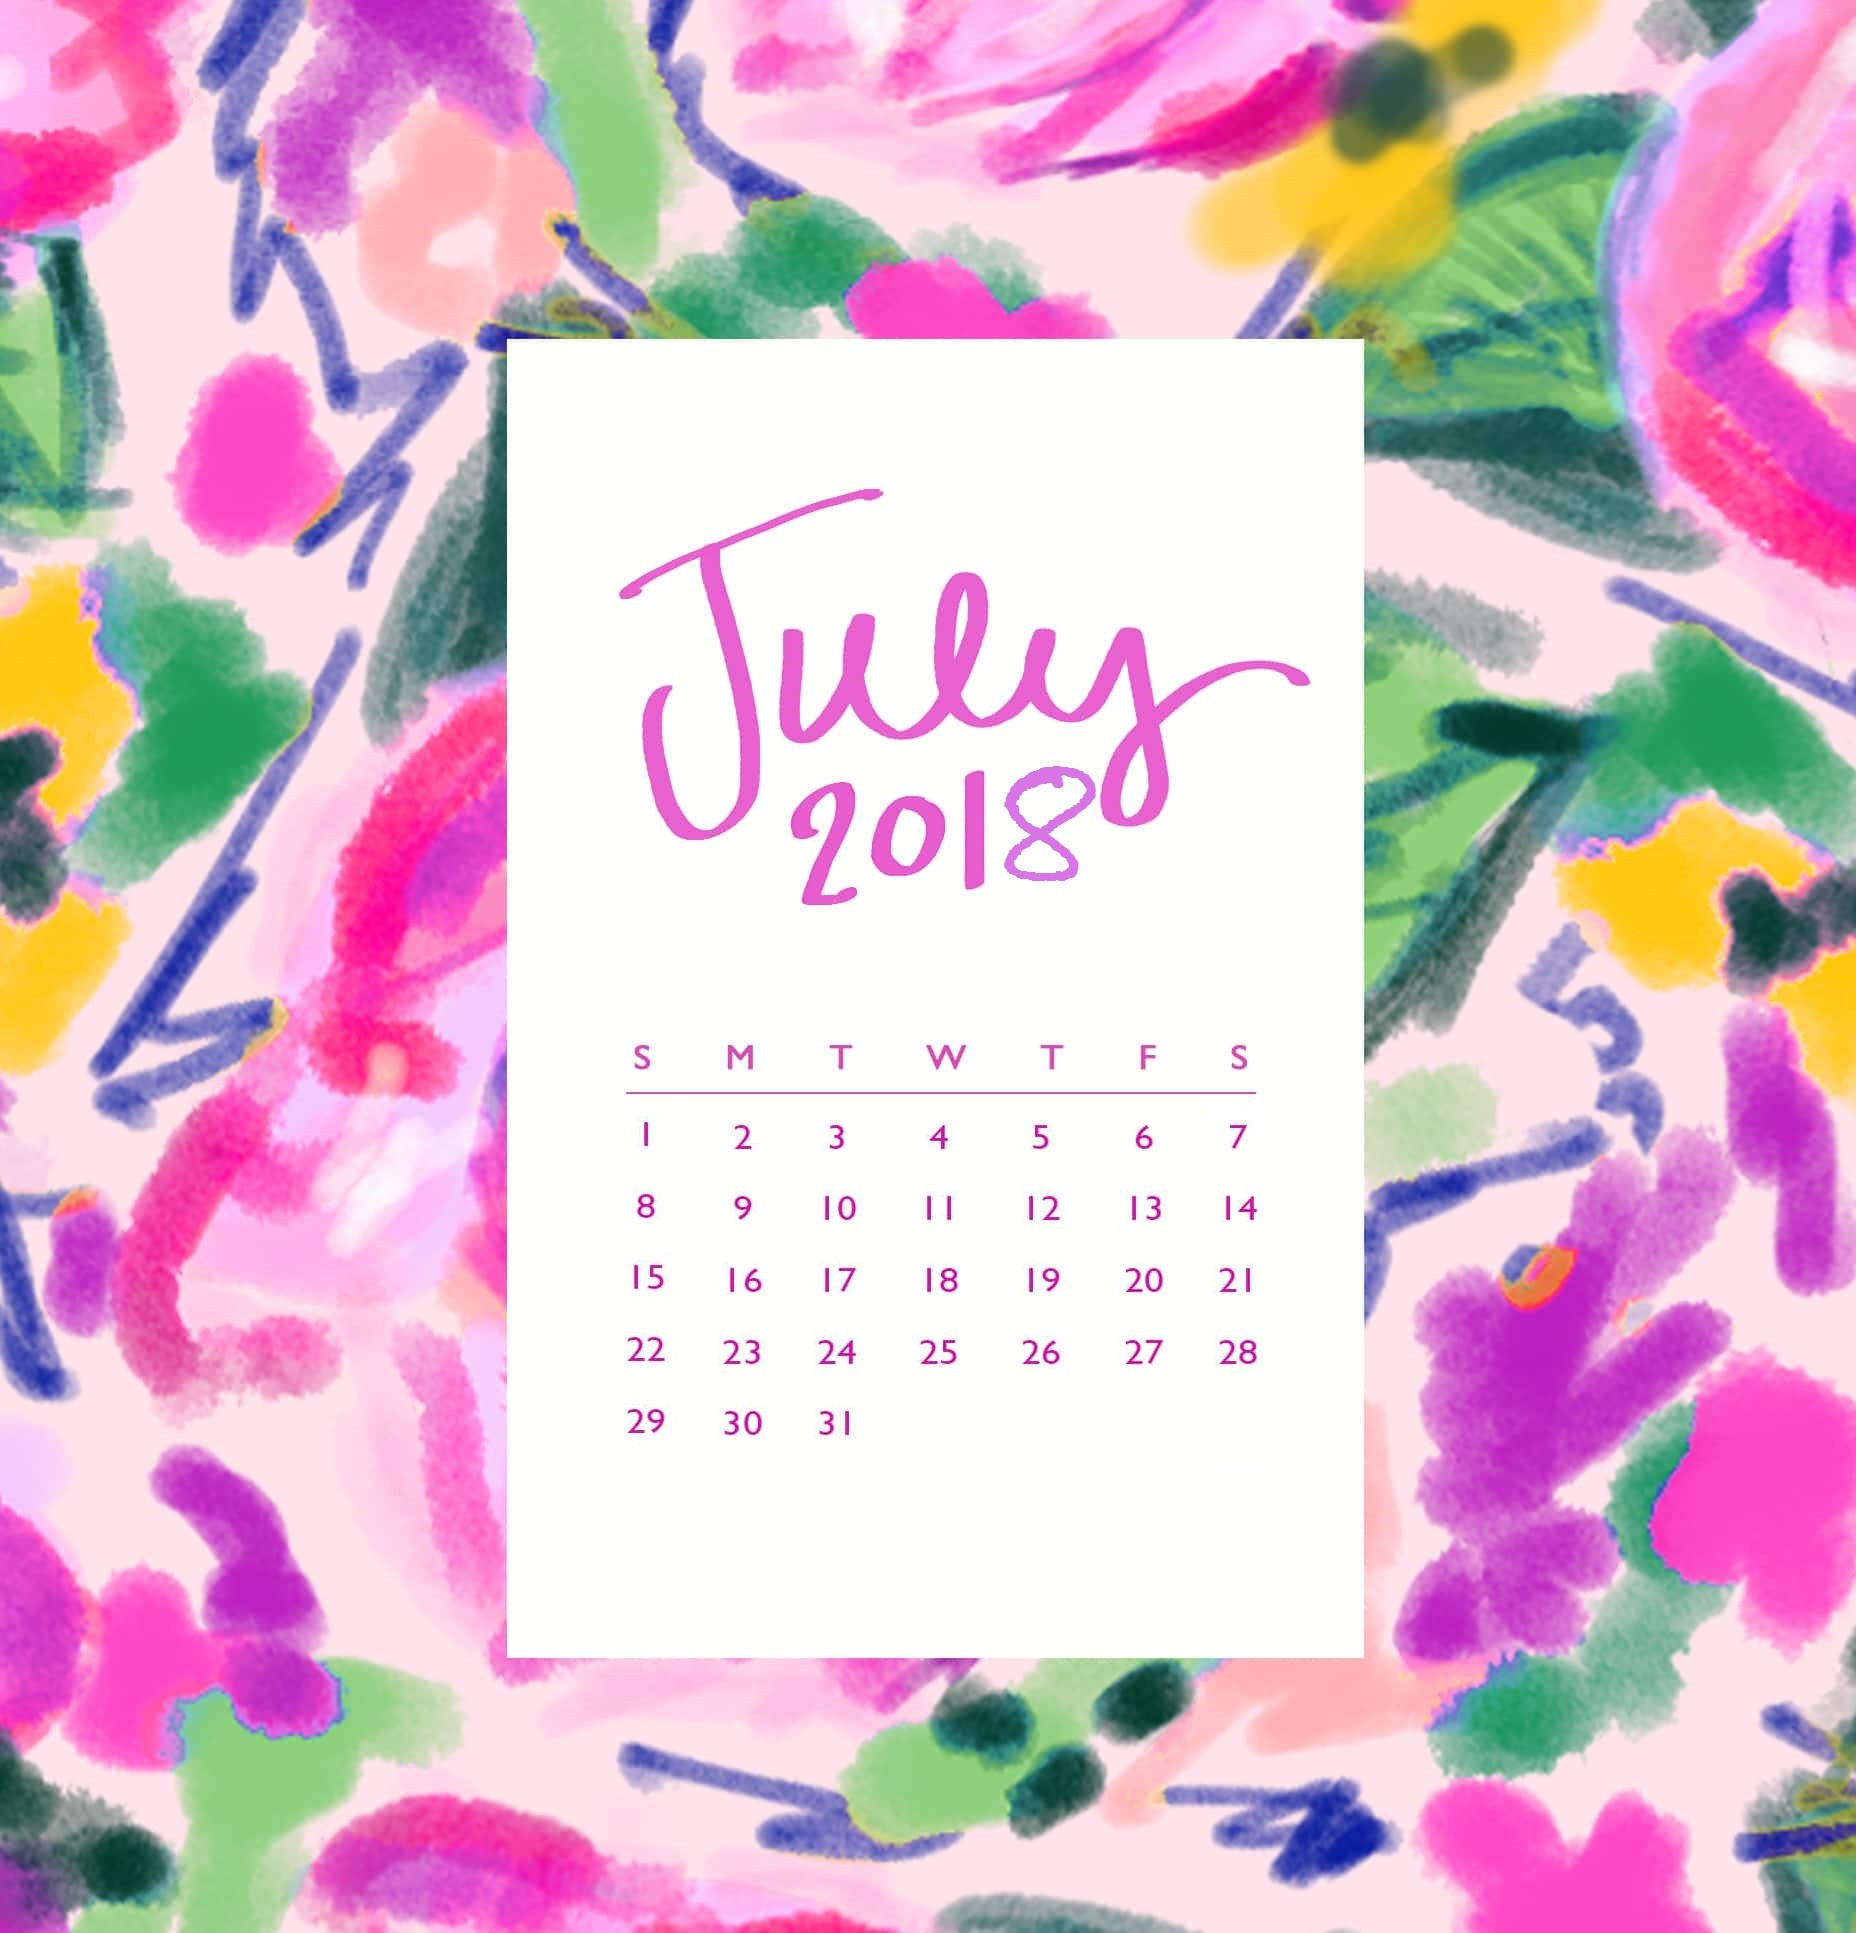 1856x1933 Floral July 2018 iPhone Calendar Wallpaper Free July 2018 iPhone Calendar  Wallpaper